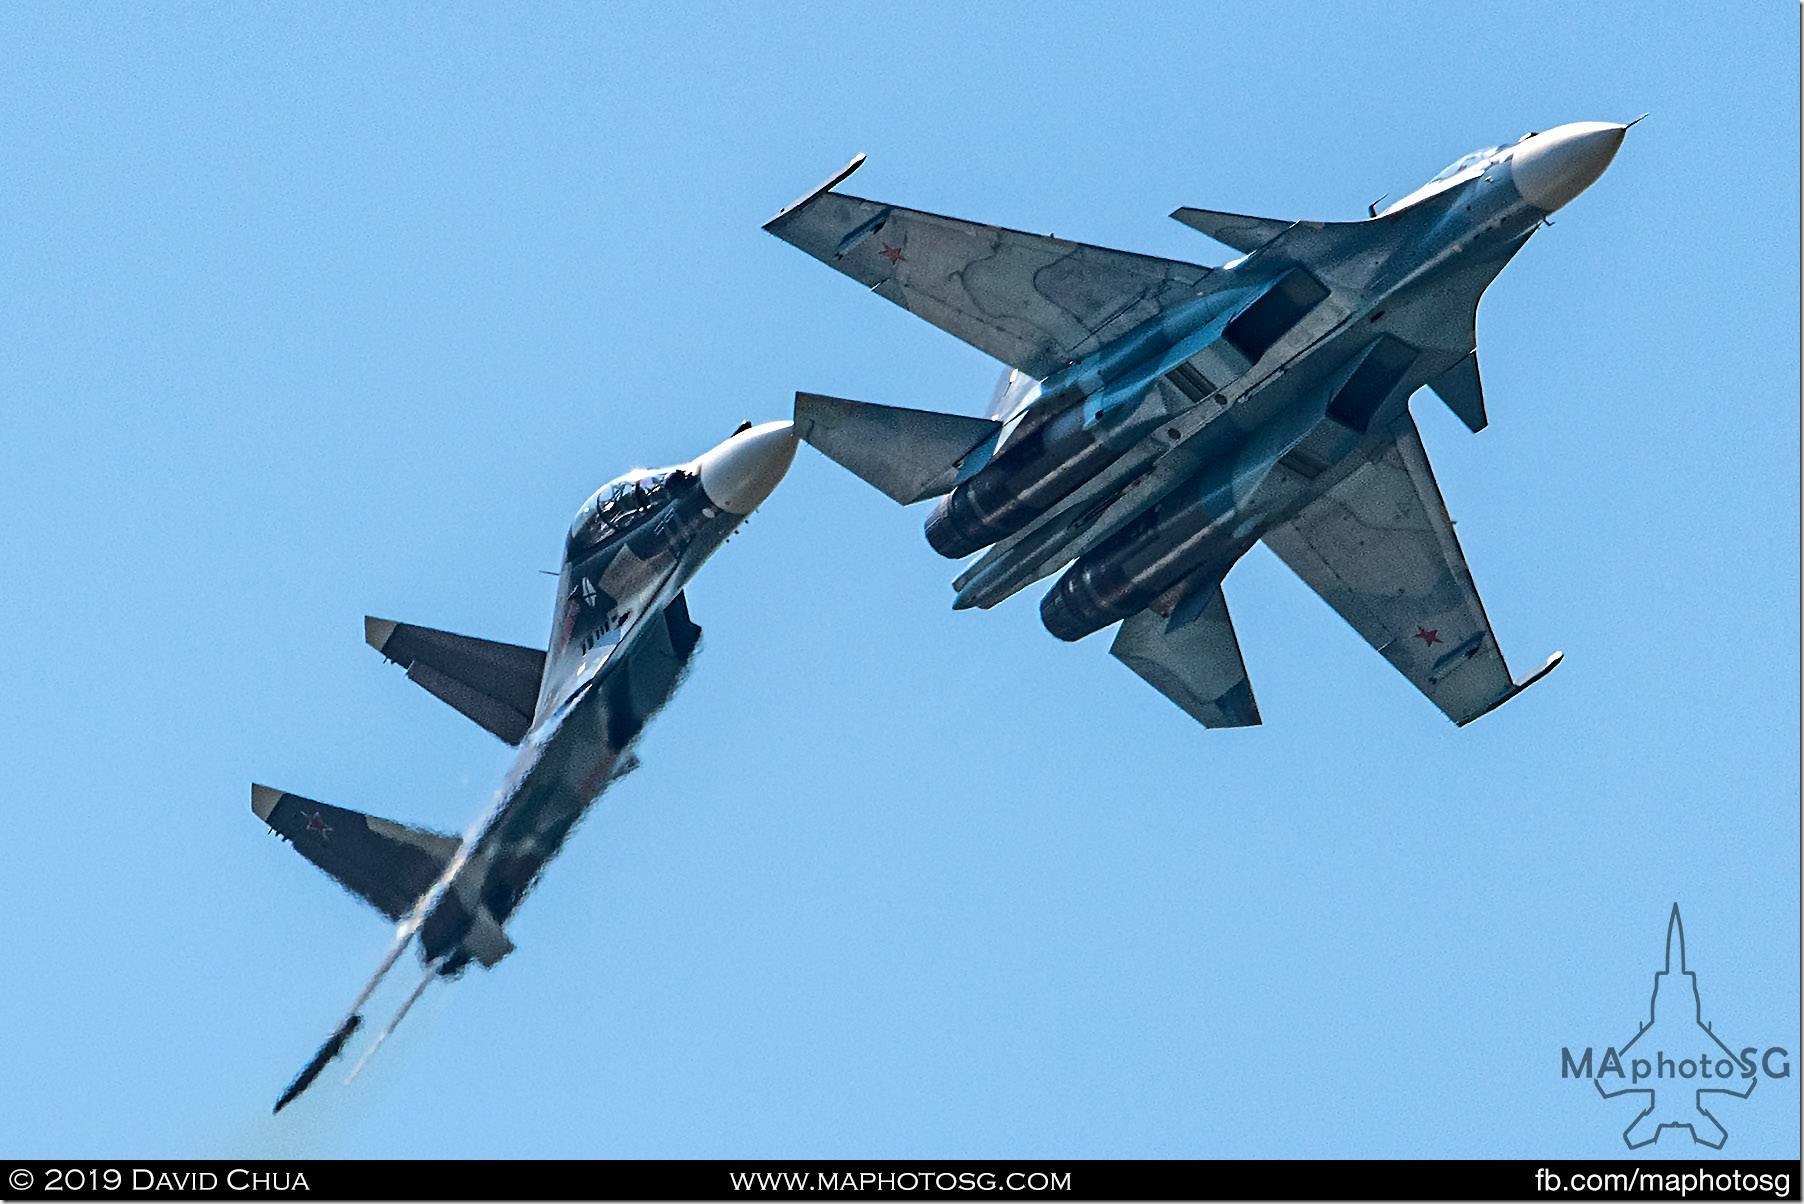 Pair of Sukhoi Su-30SM fighters